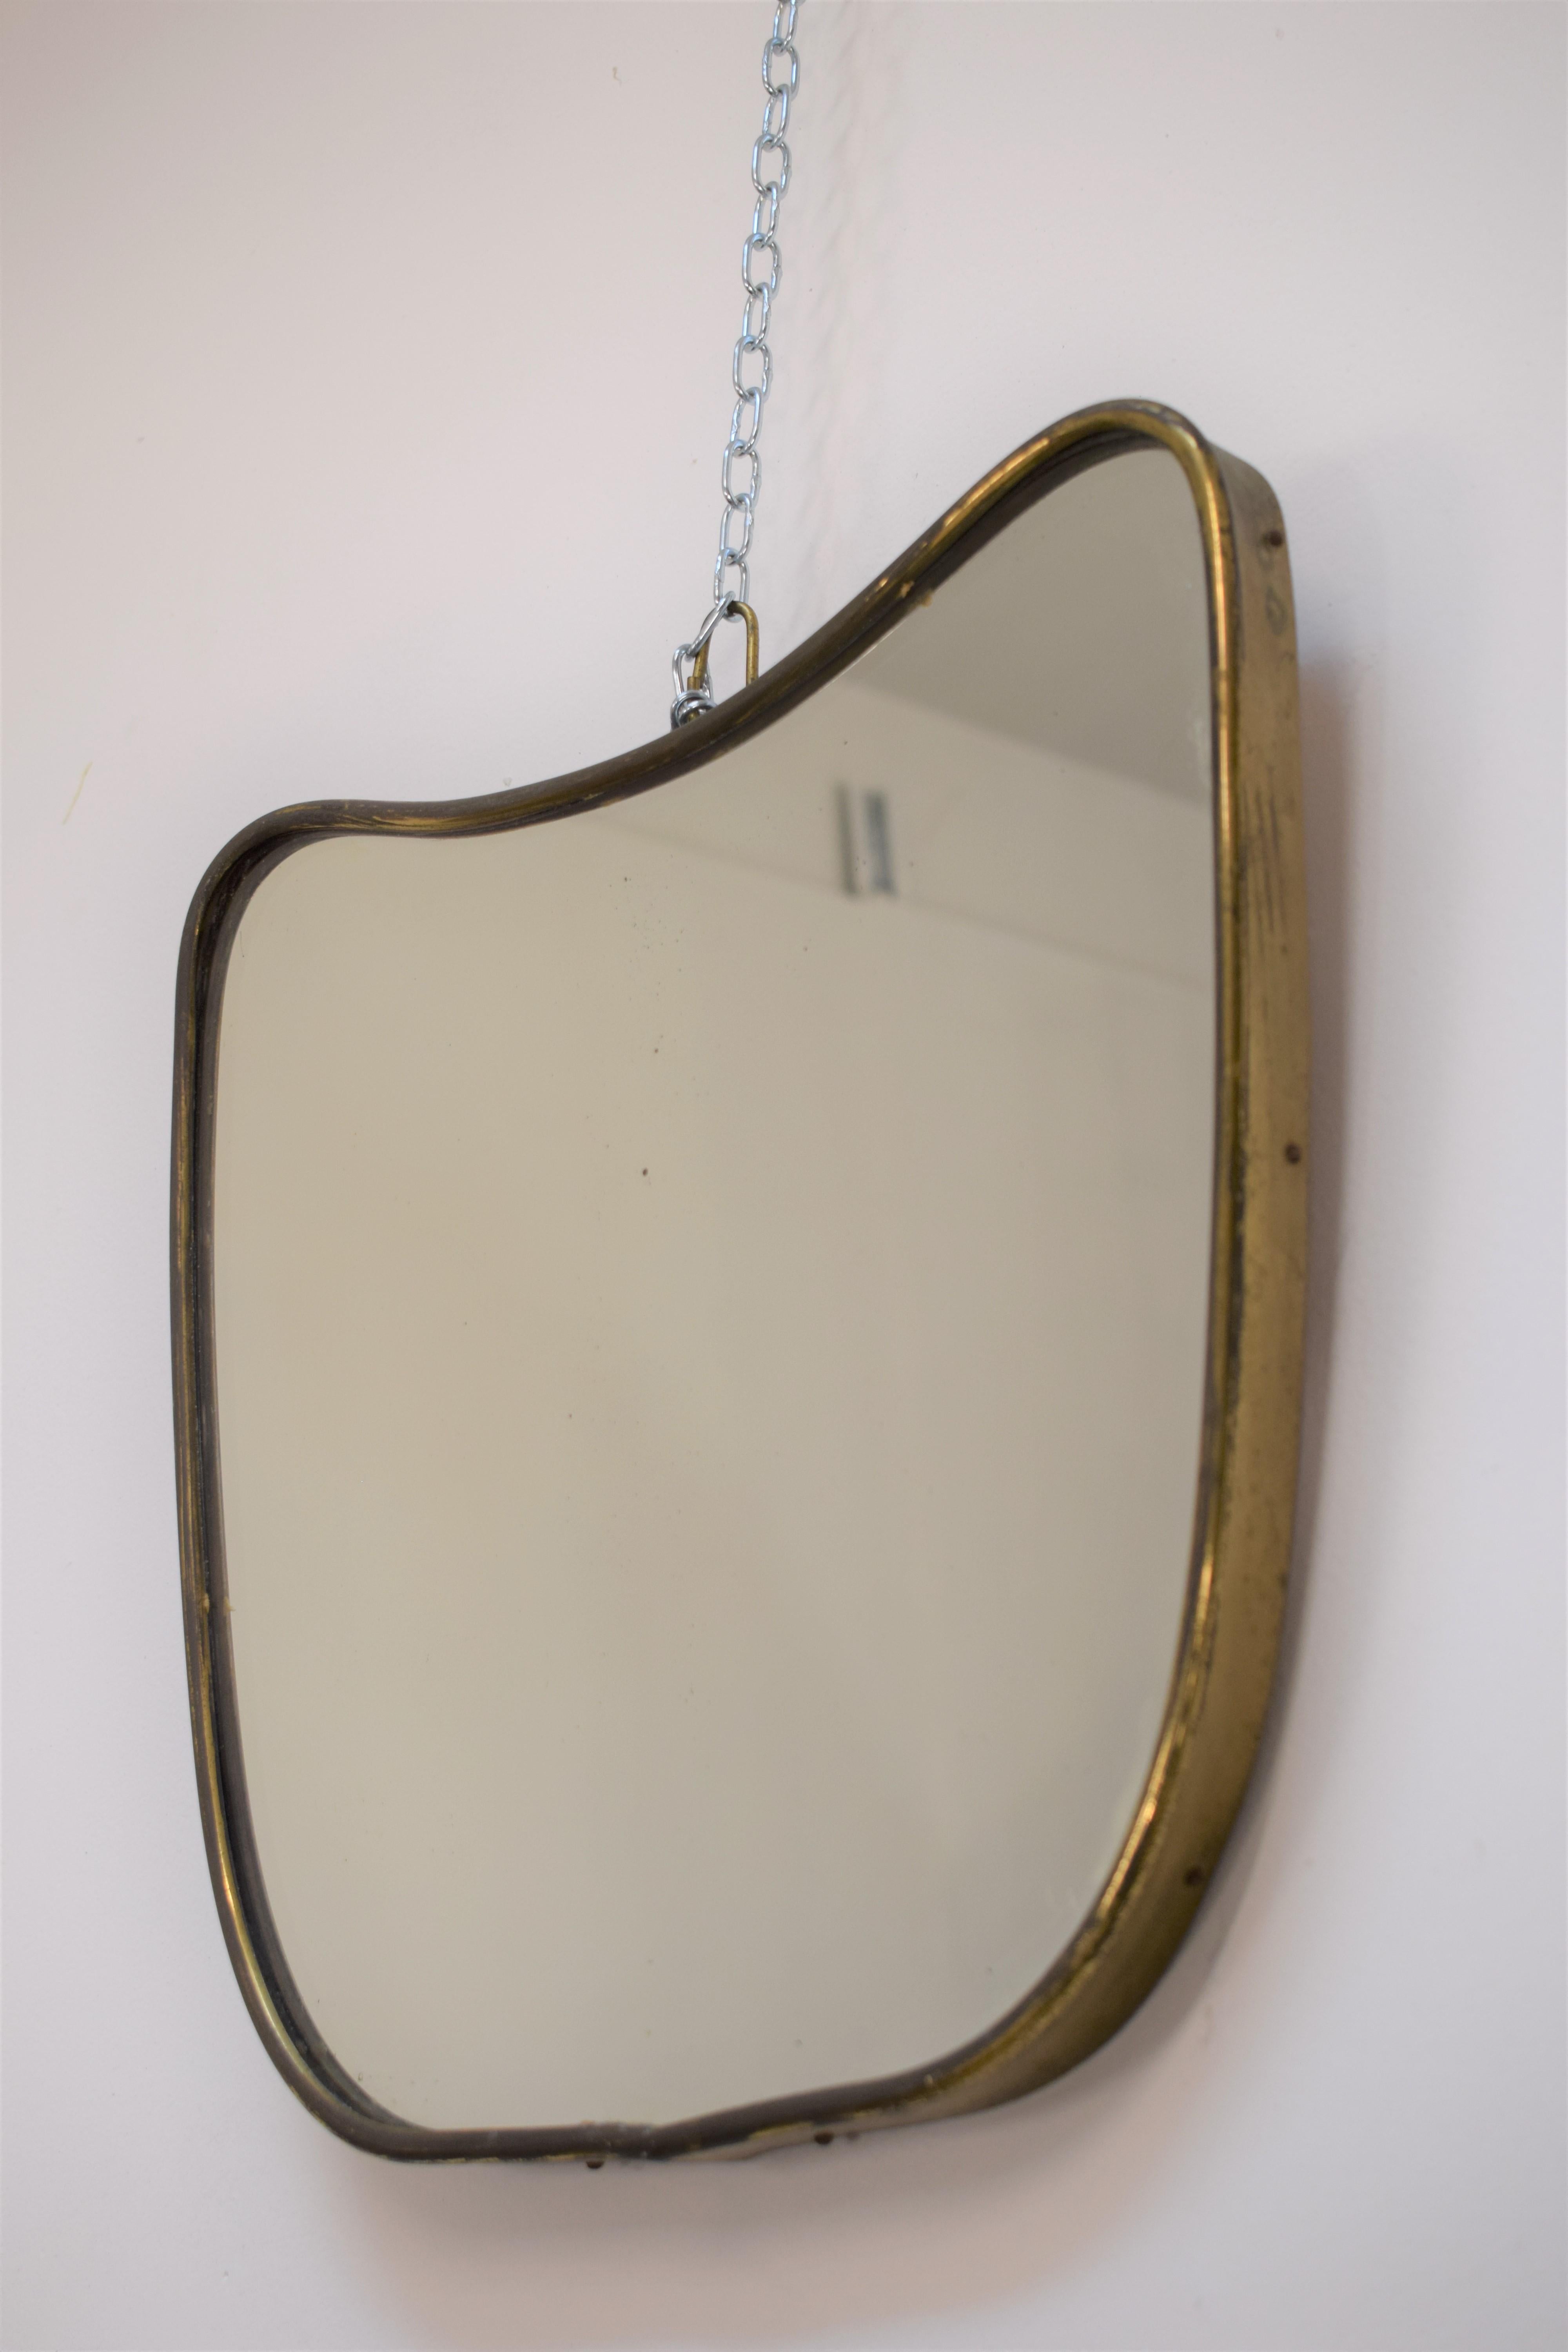 Italian small brass mirror, 1950s.

Dimensions: H= 33 cm; W= 33 cm; D= 3 cm.